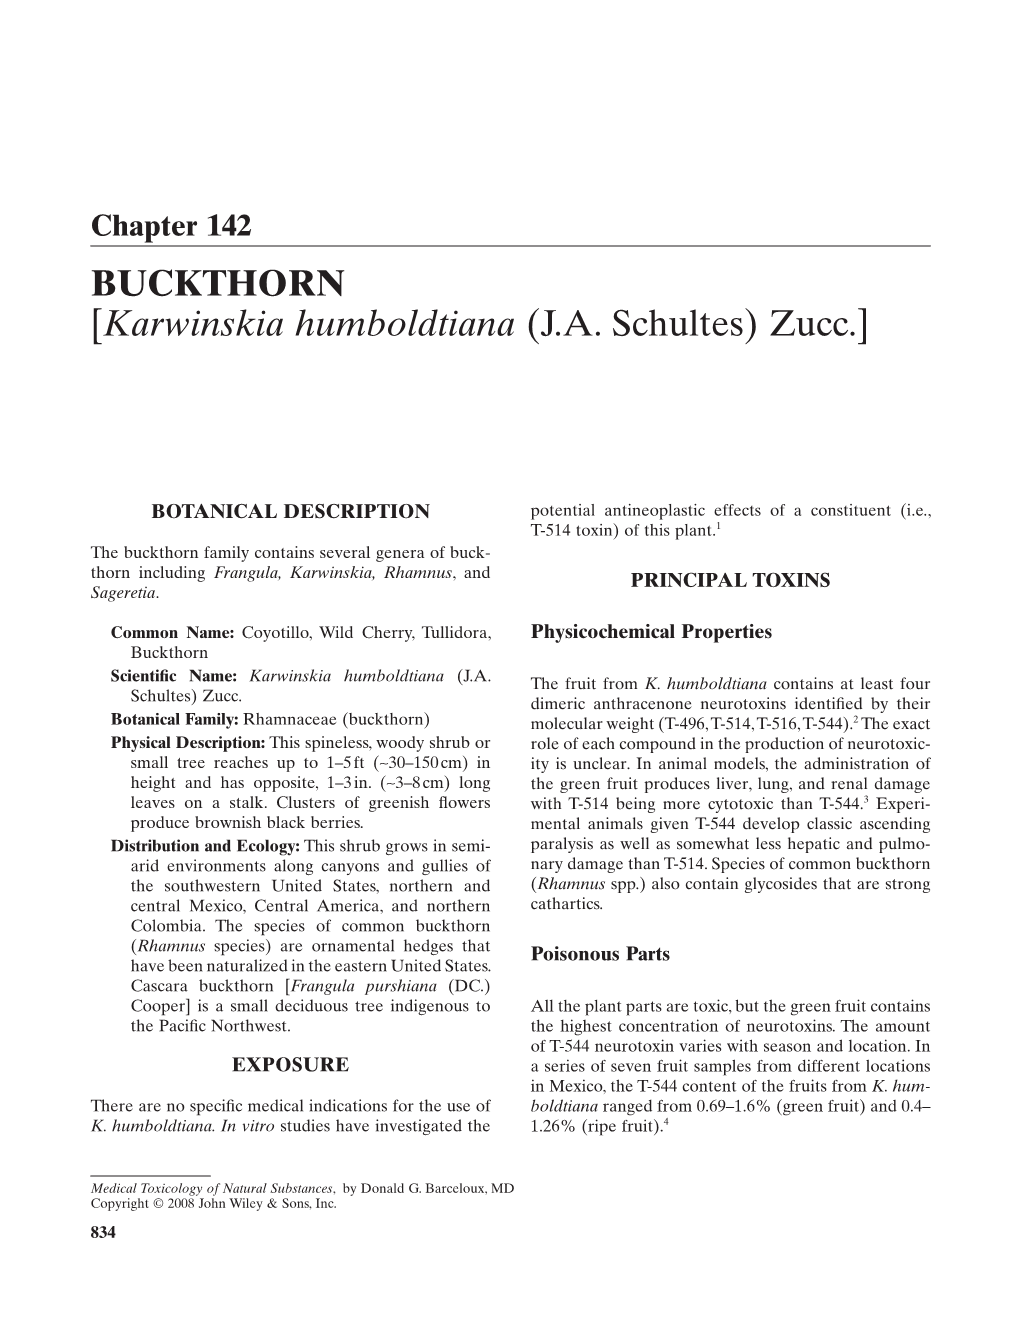 Buckthorn [Karwinskia Humboldtiana